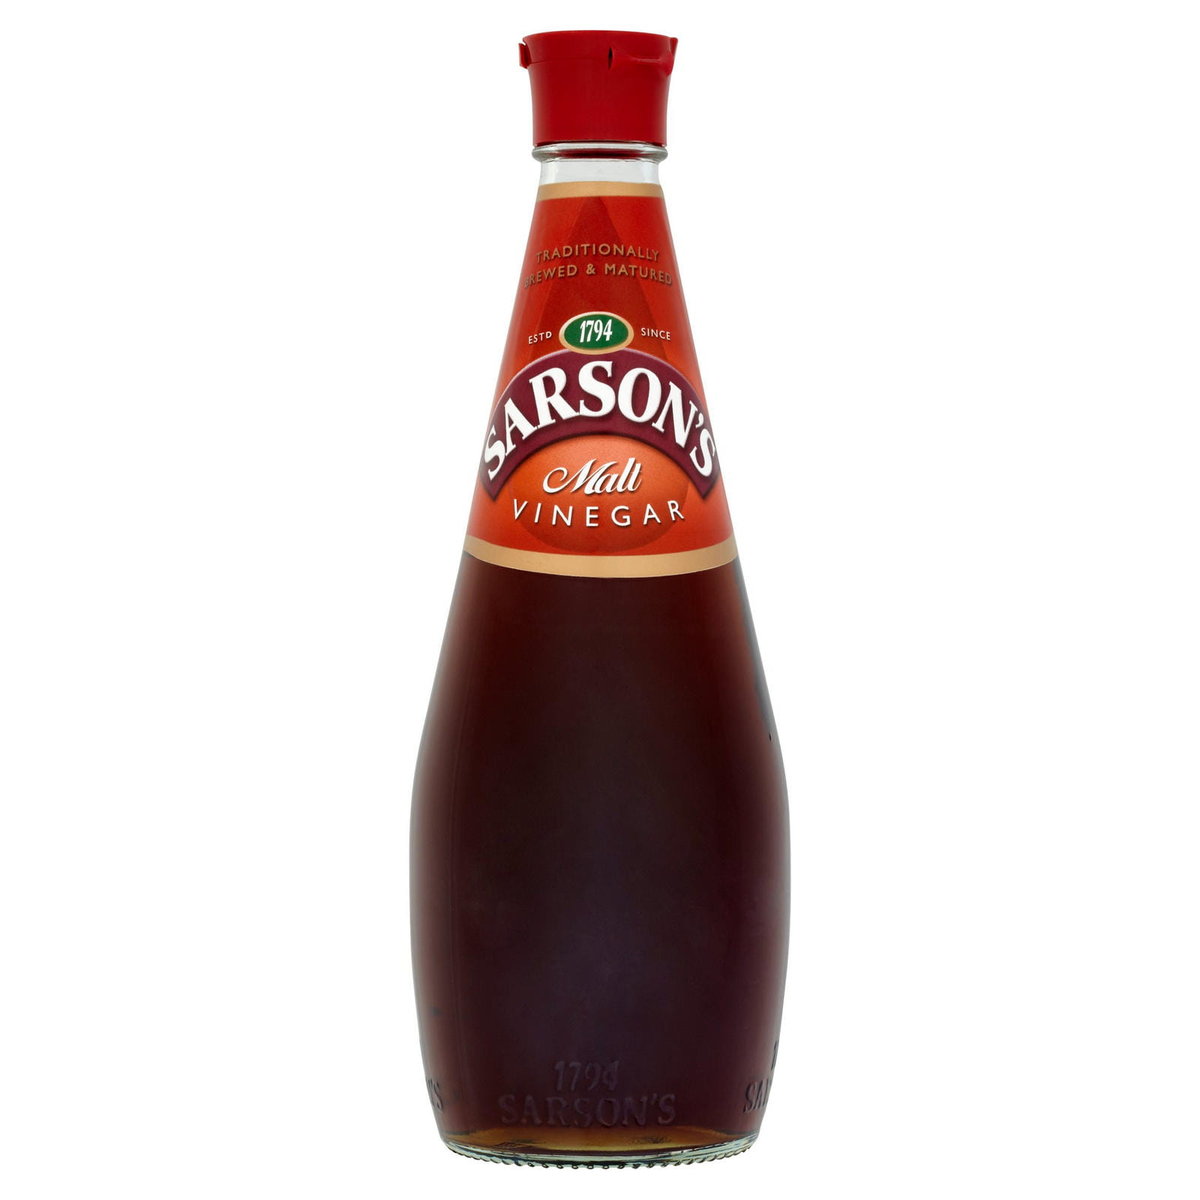 SARSON'S Malt Vinegar - ocet słodowy 400ml